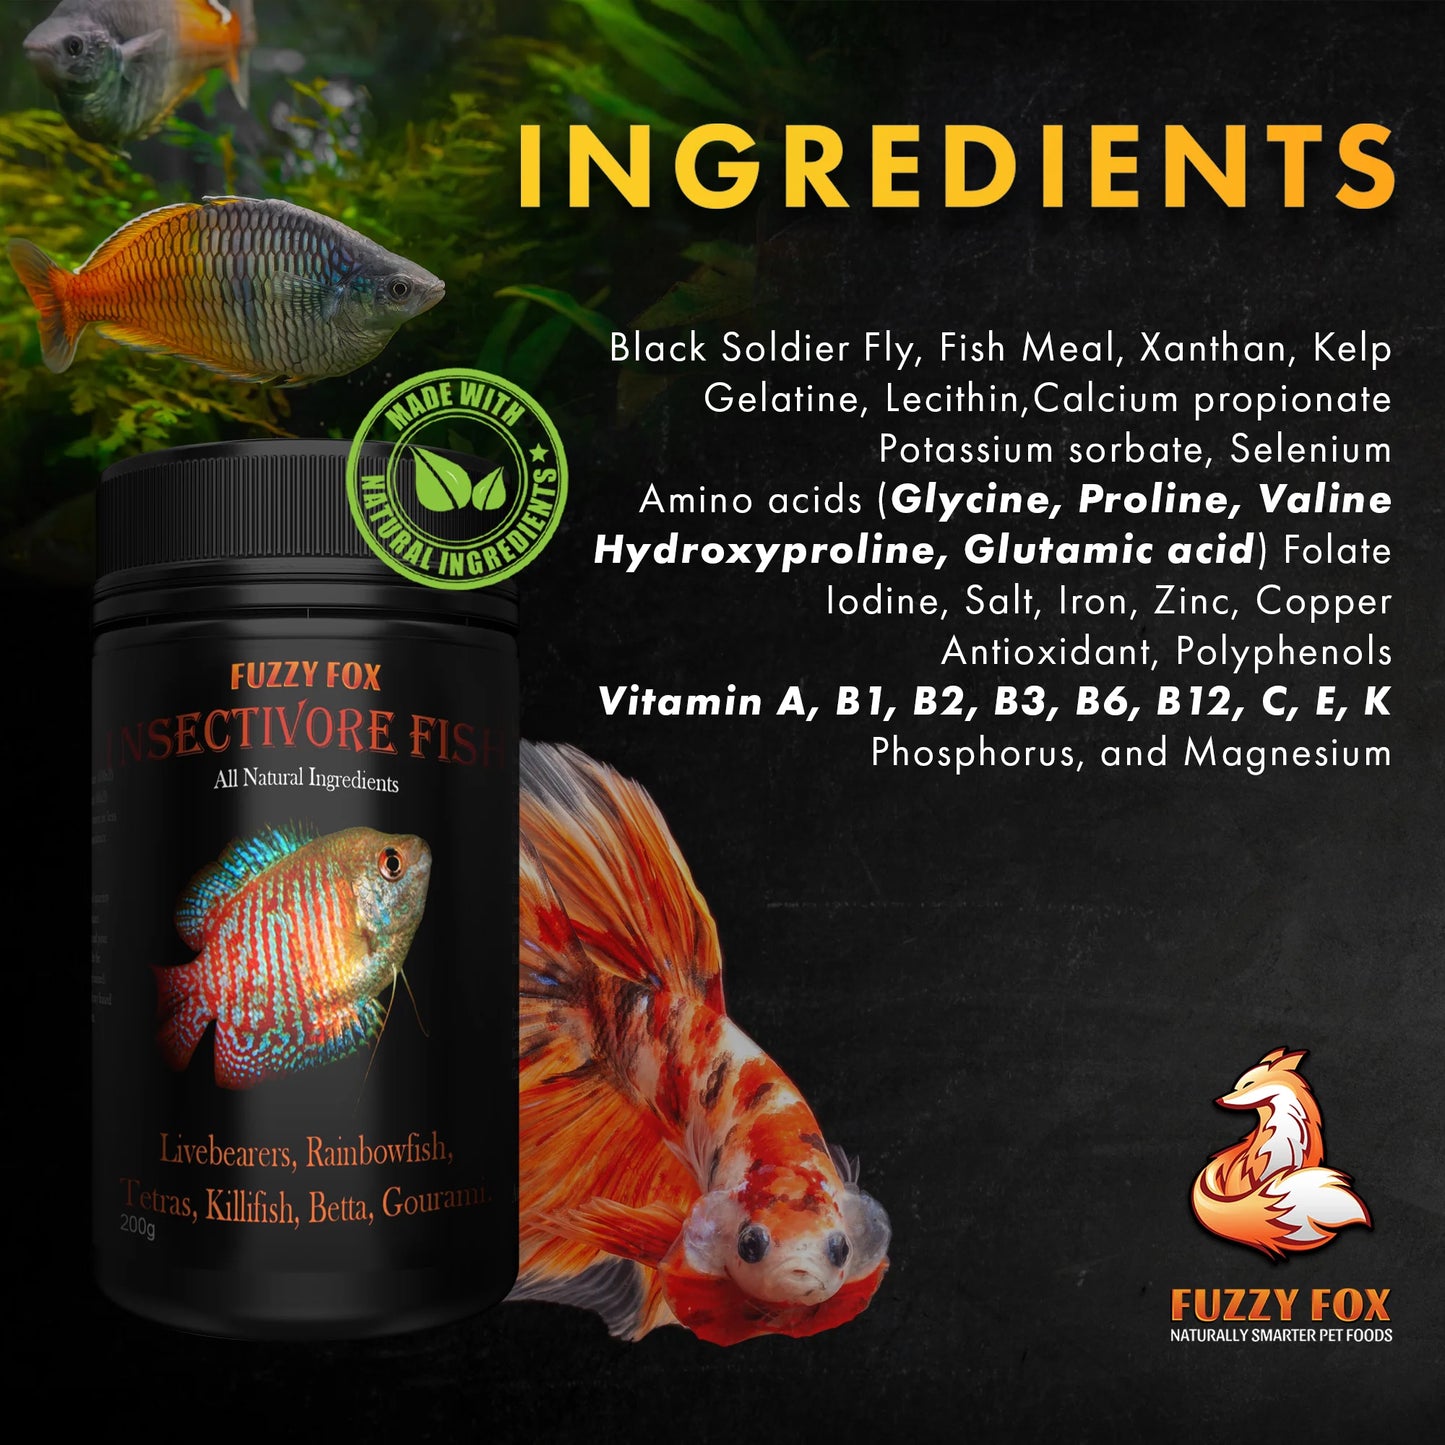 Fuzzy Fox Fish Insectivore Gel Food Pre-mix